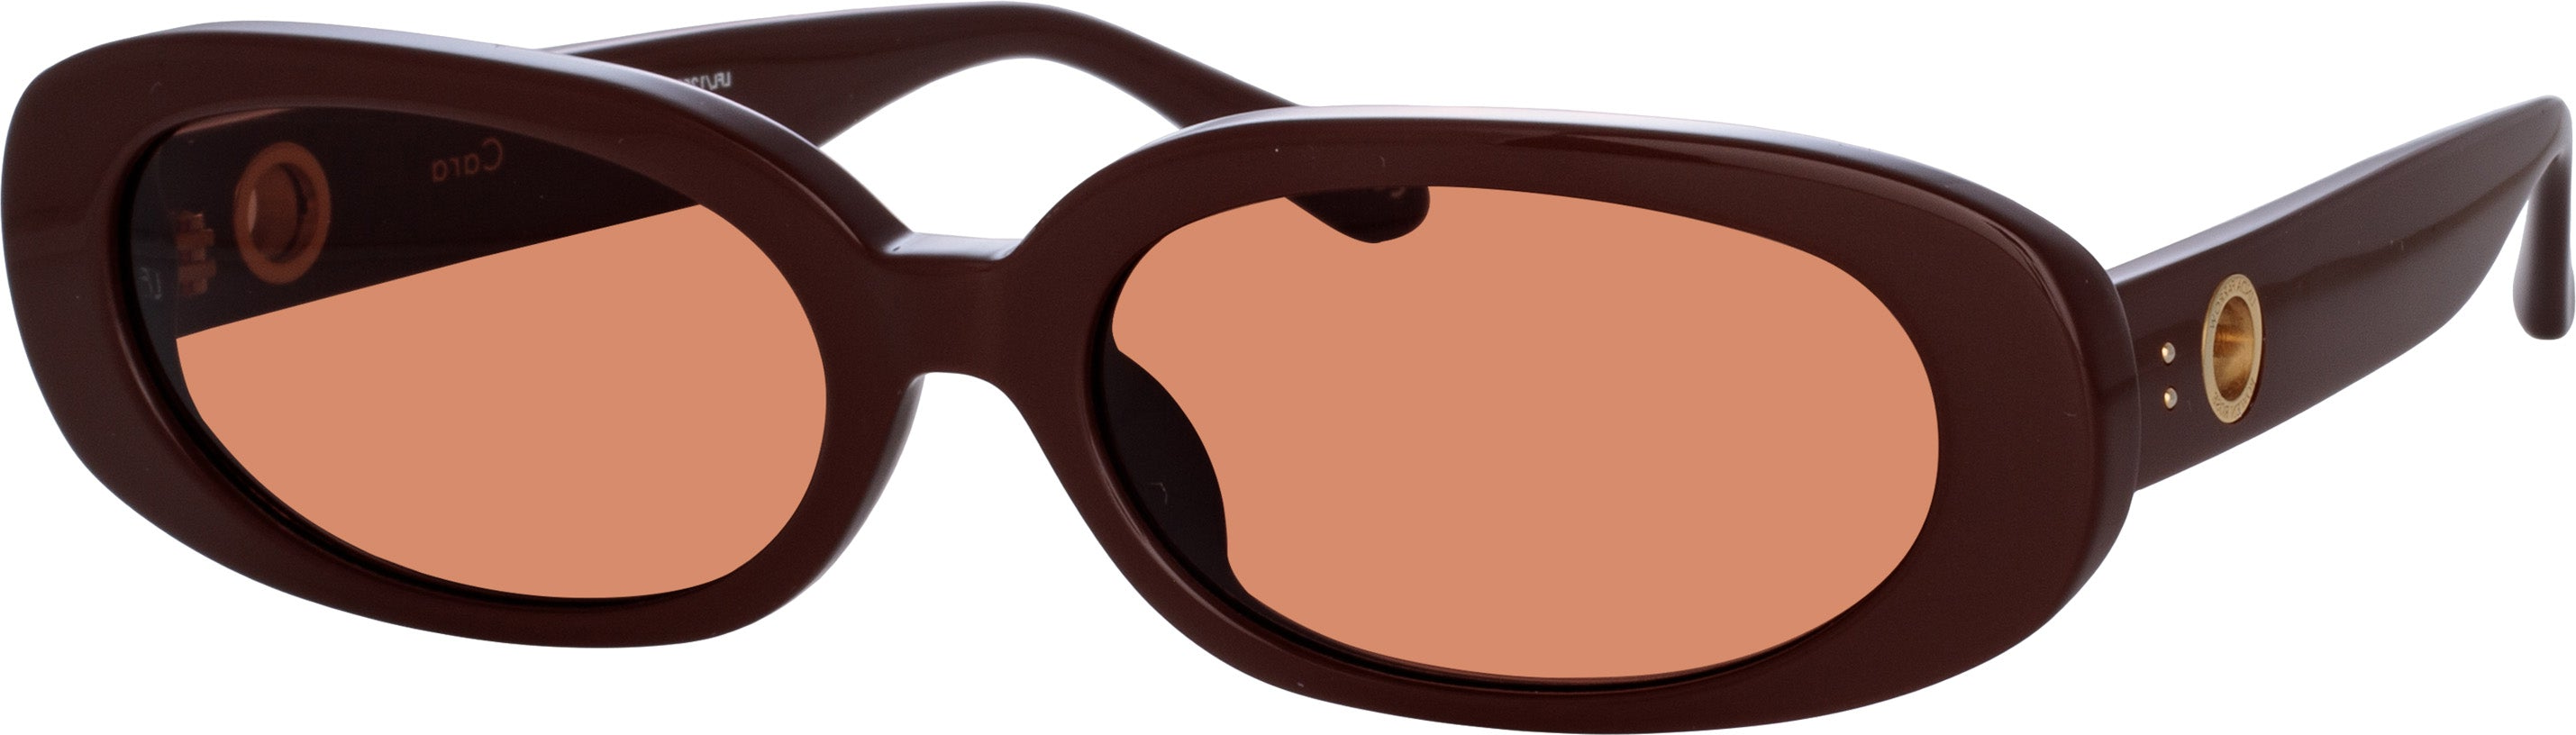 Color_LFL1252C11SUN - Cara Oval Sunglasses in Brown